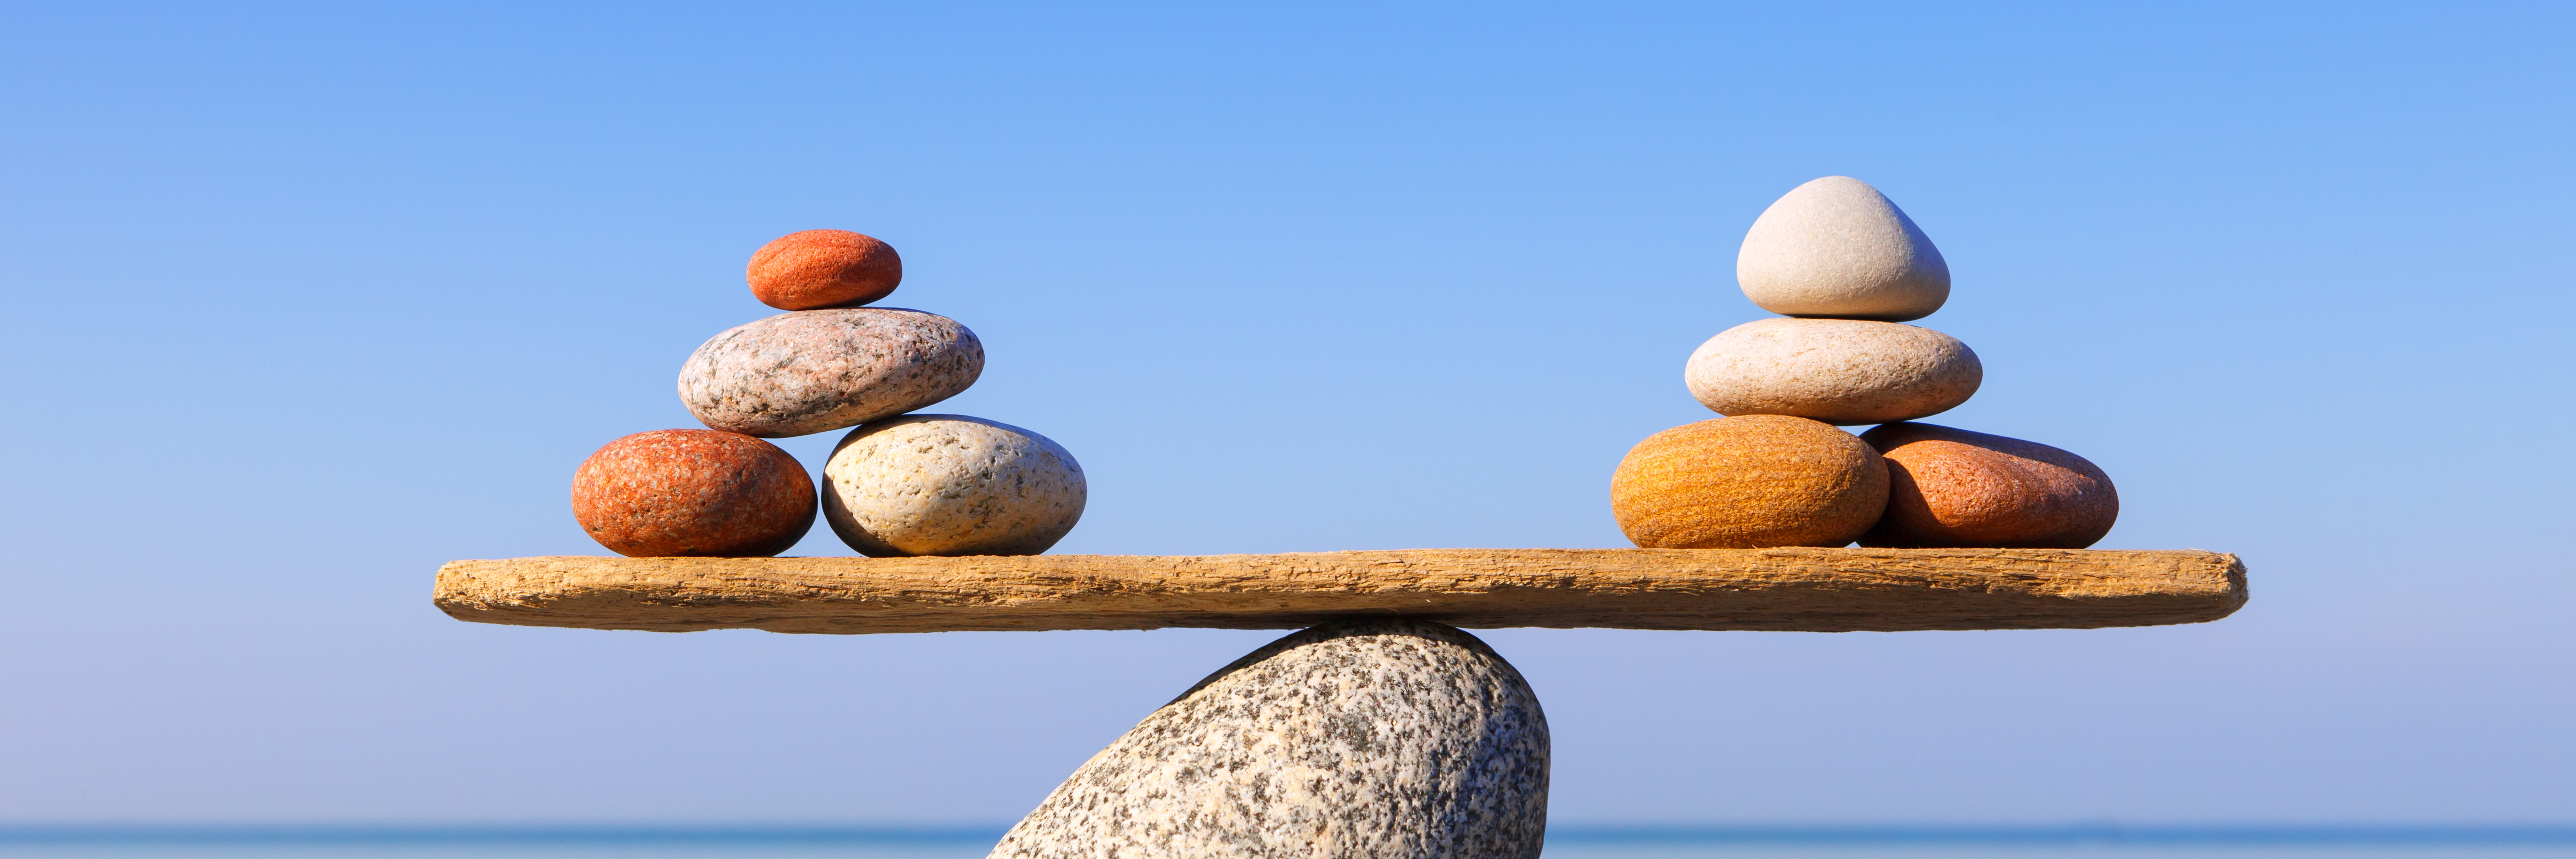 Balancing rocks. Source: Adobe Stock.